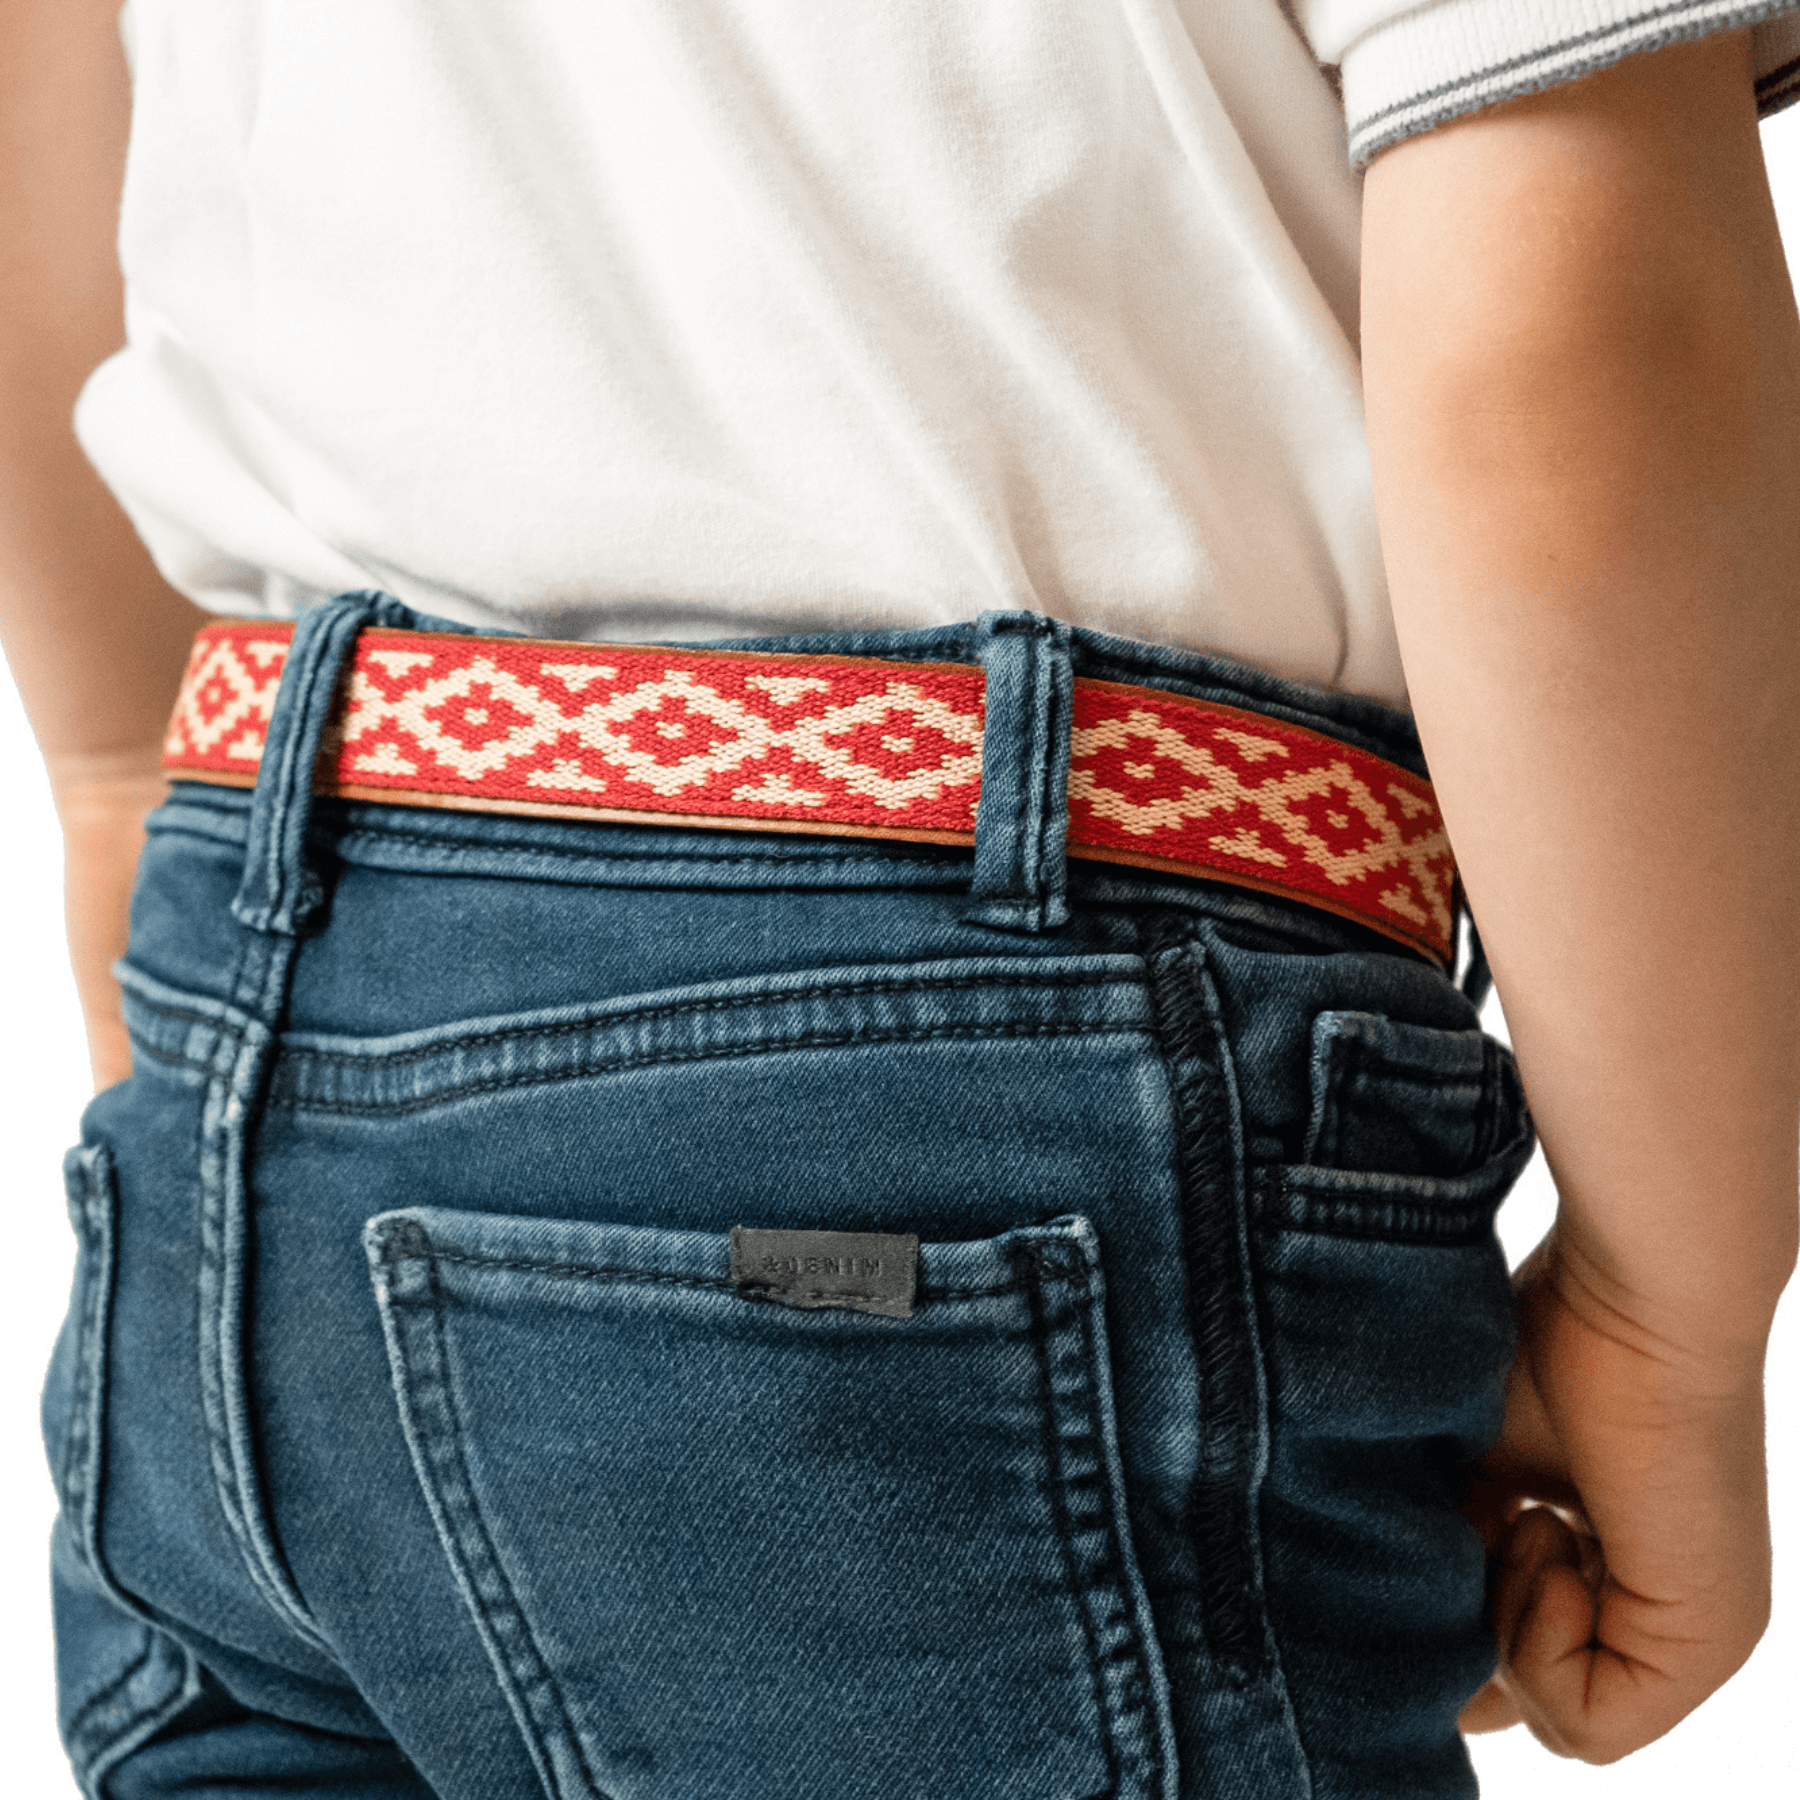 Gaucholife Belts Kids Guarda Pampas Woven Polo Belt (Red)